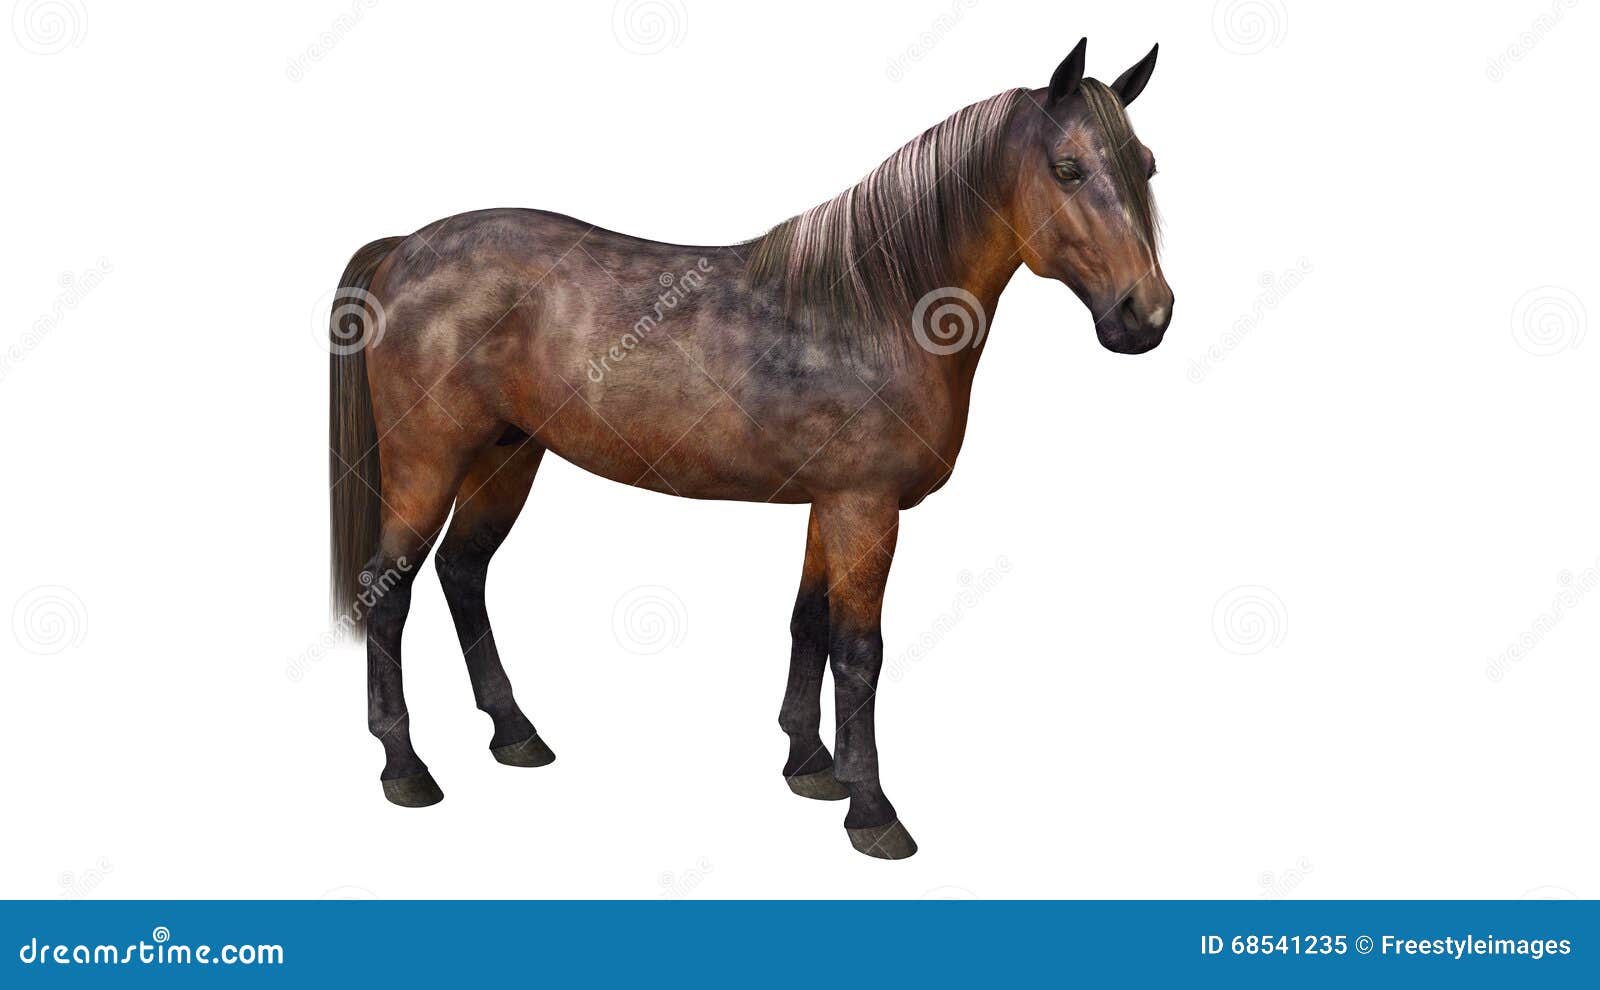 horse standing, hoofed animal on white